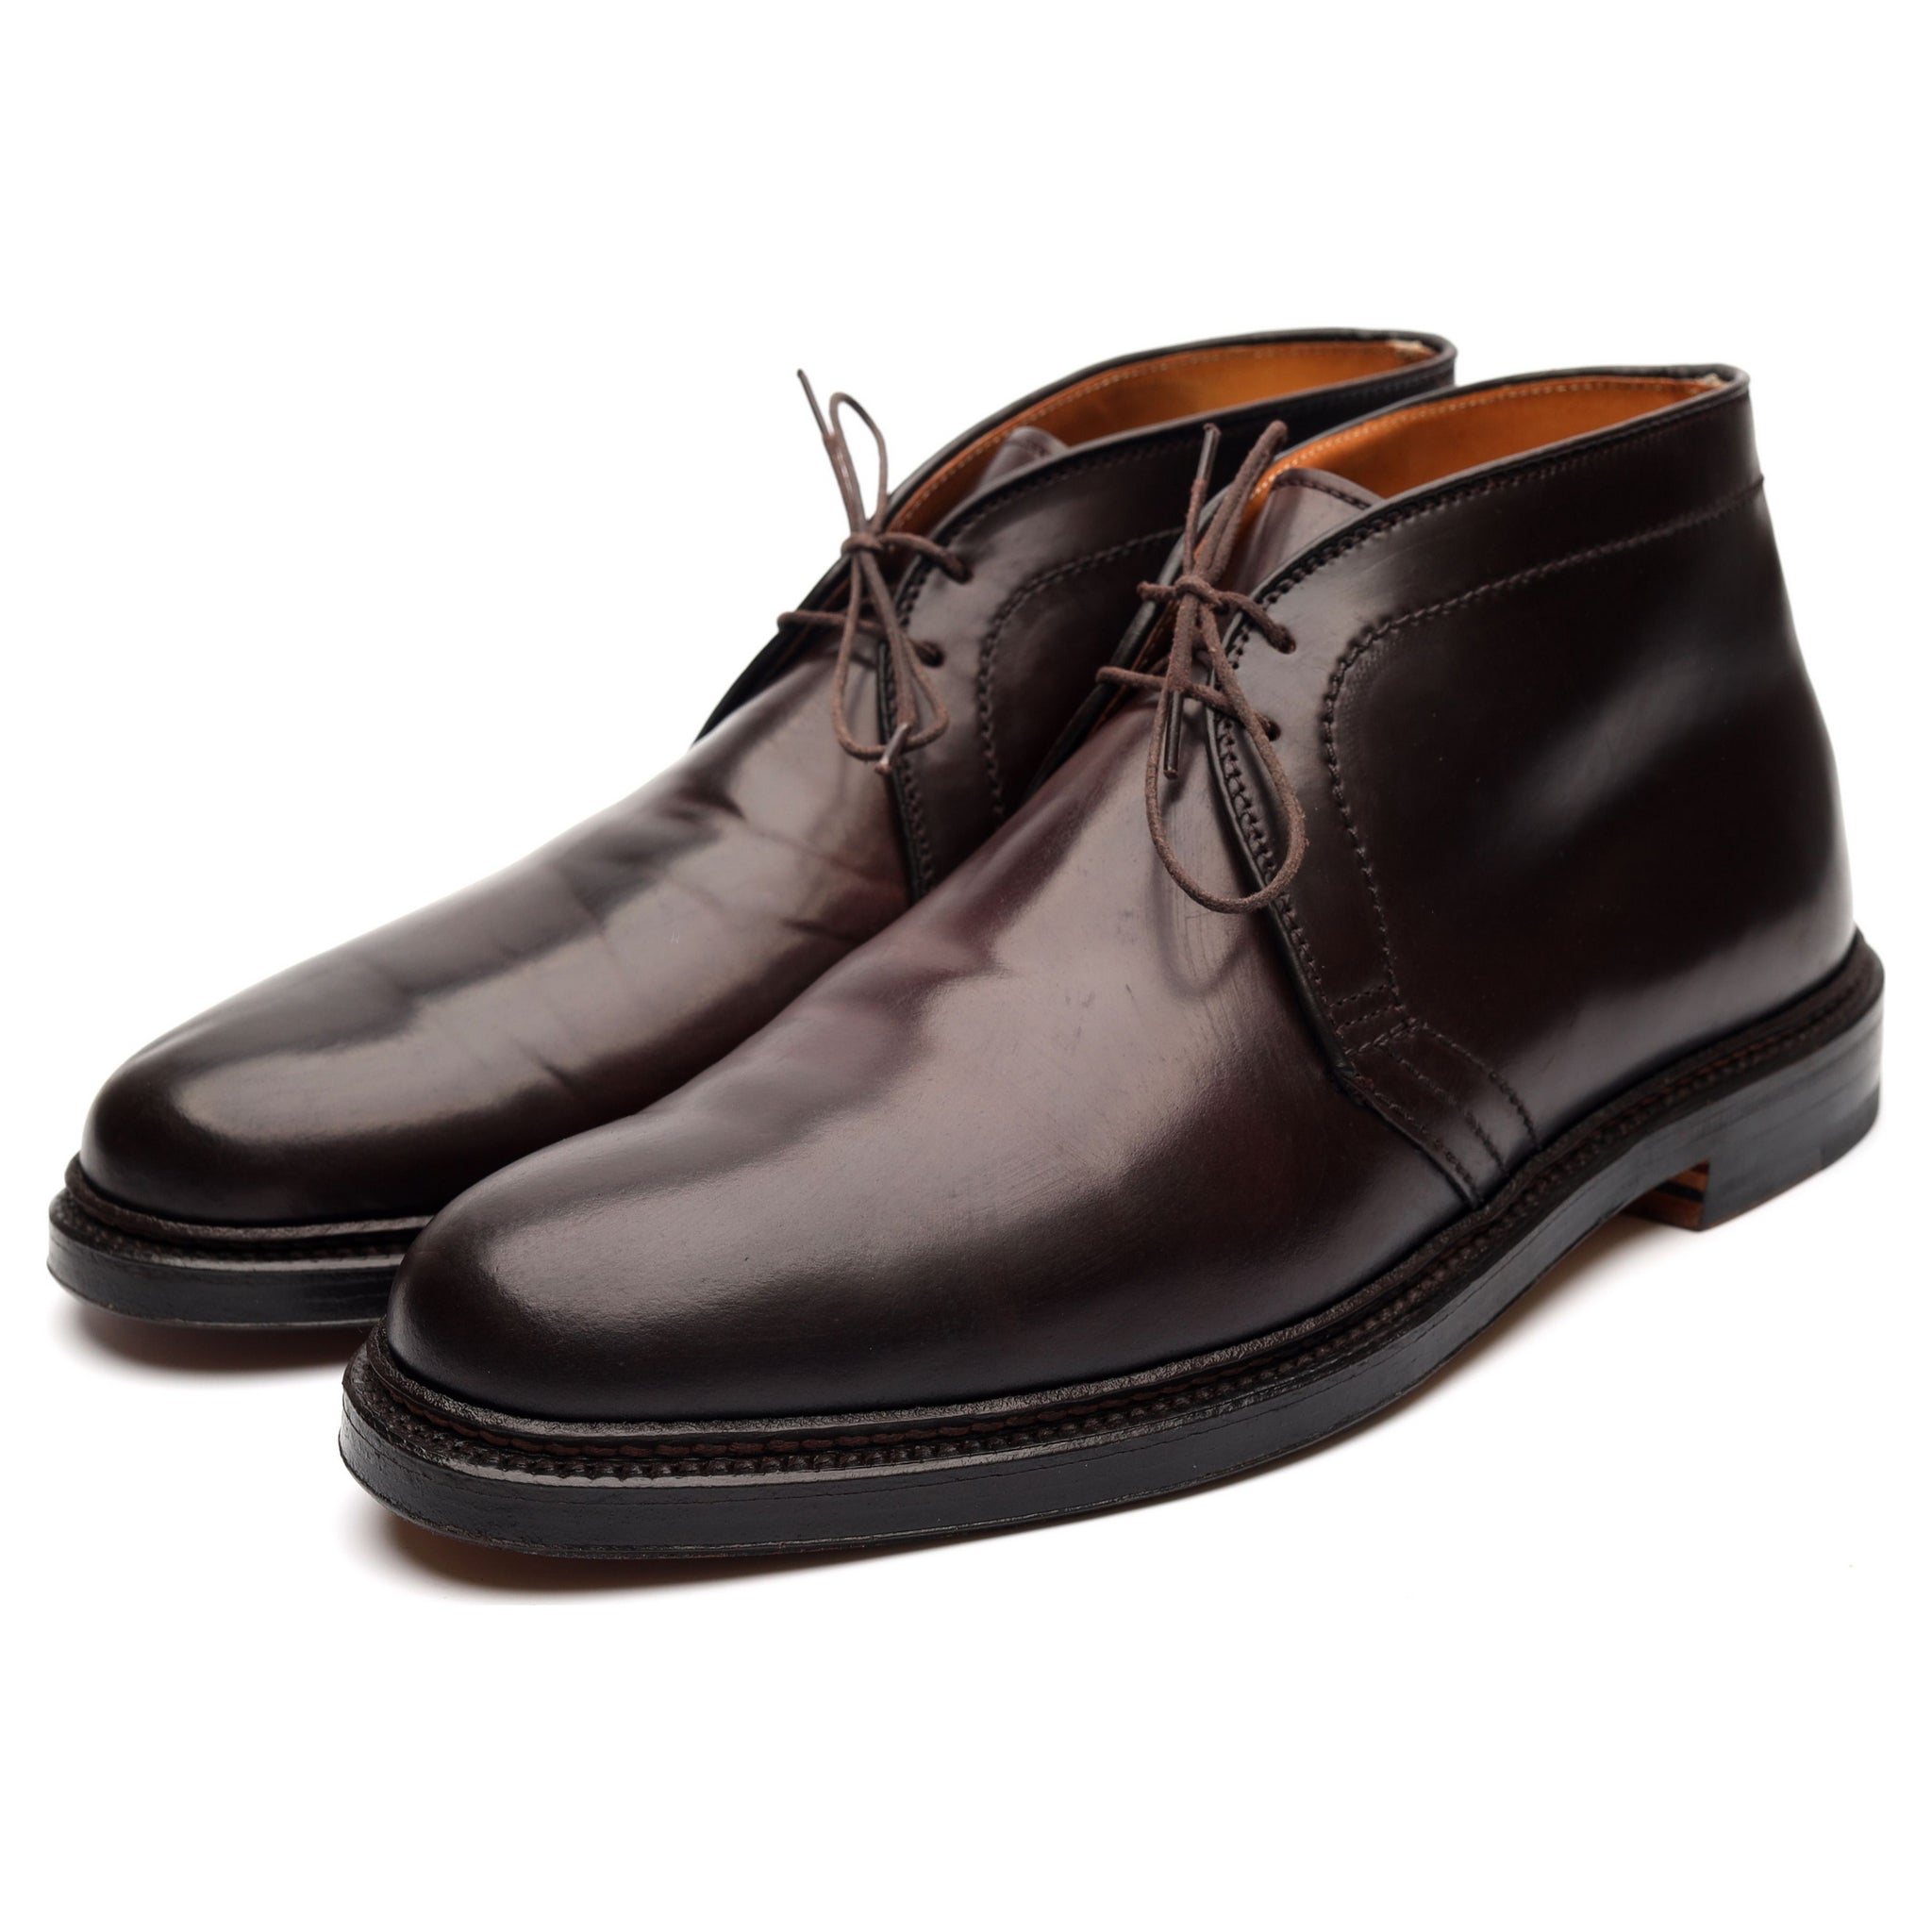 '1339' Burgundy Cordovan Leather Chukka Boots UK 9 US 9.5